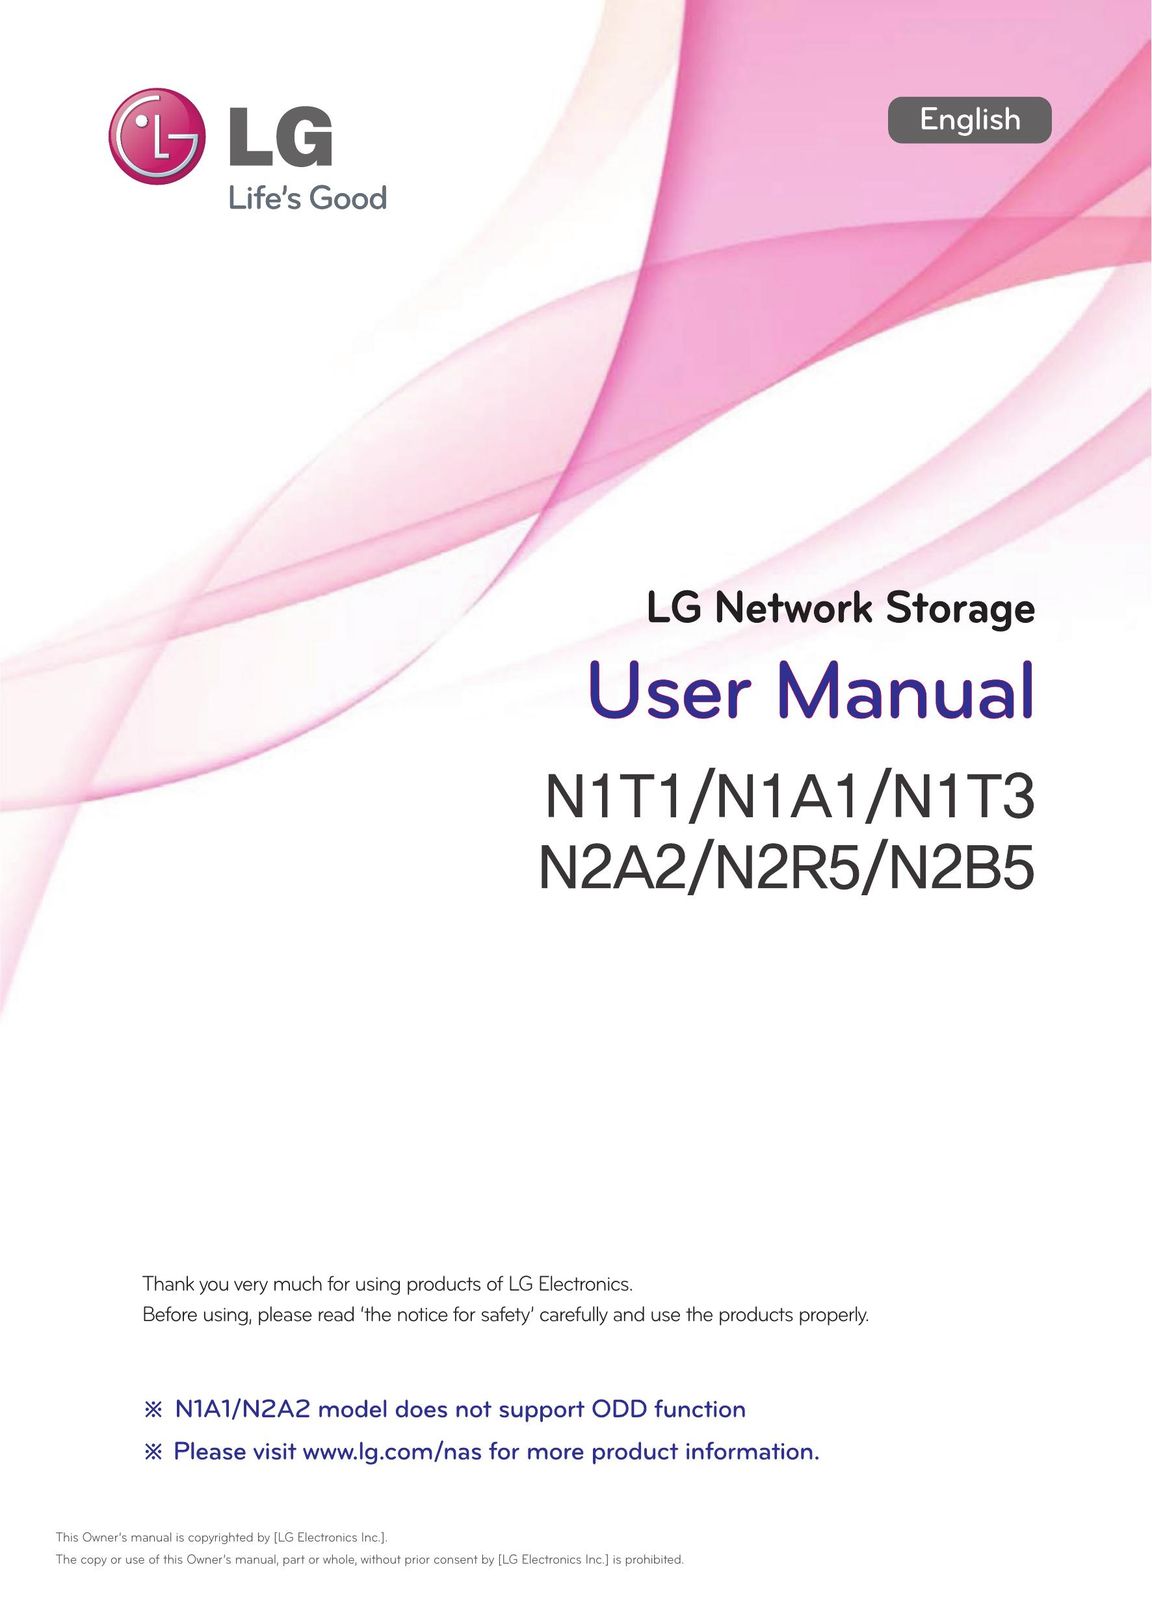 LG Electronics N1A1 Network Hardware User Manual